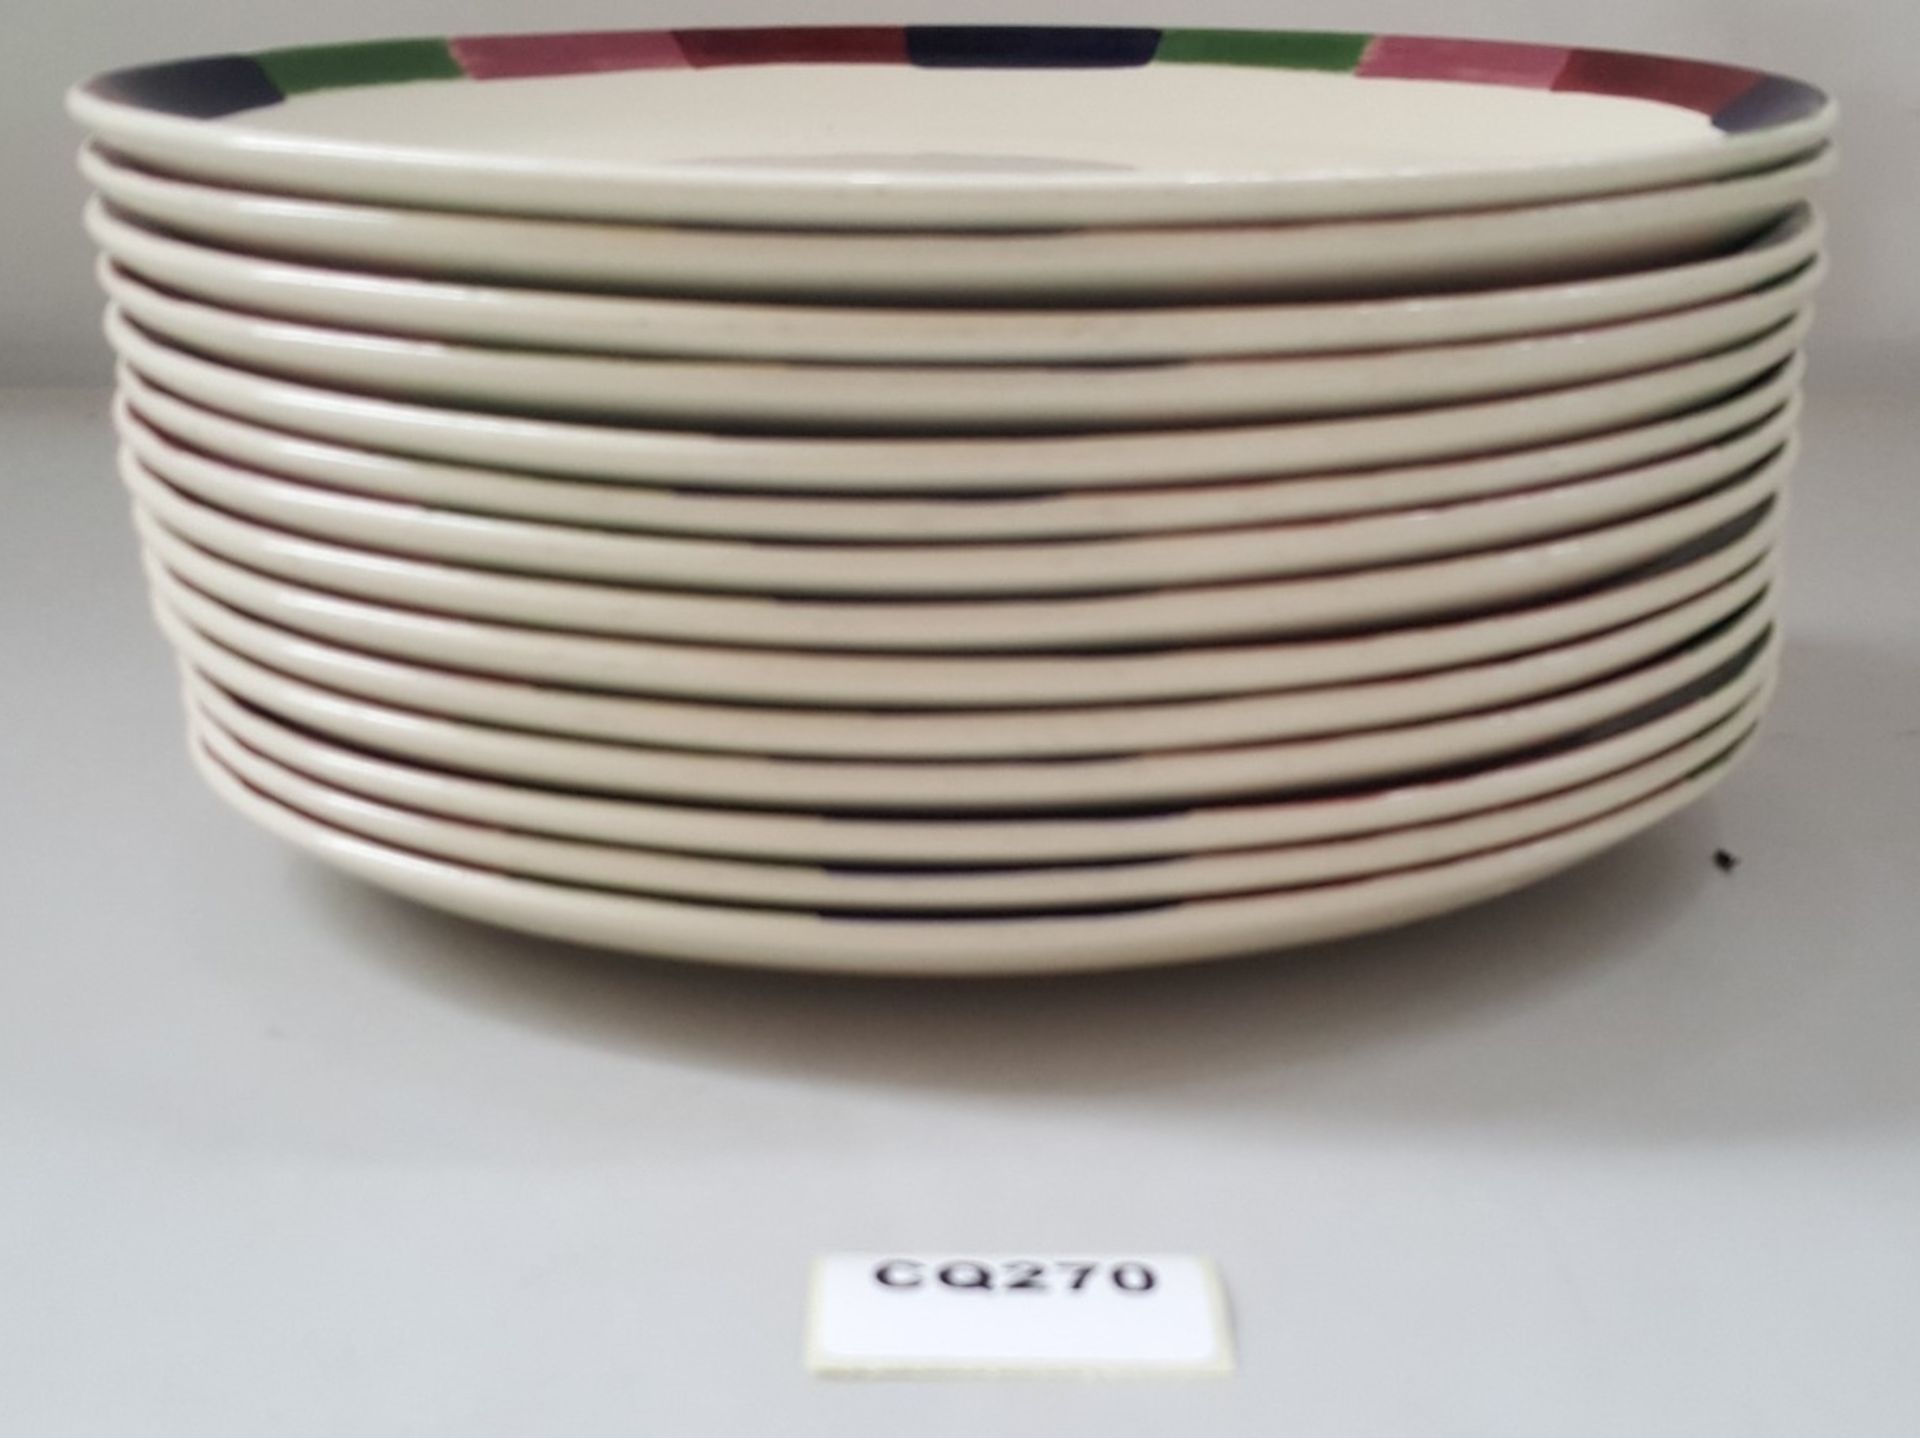 14 x Steelite Oval Serving Plates Cream With Patterned Edge L30/W23.5CM - Ref CQ270 - Bild 2 aus 4